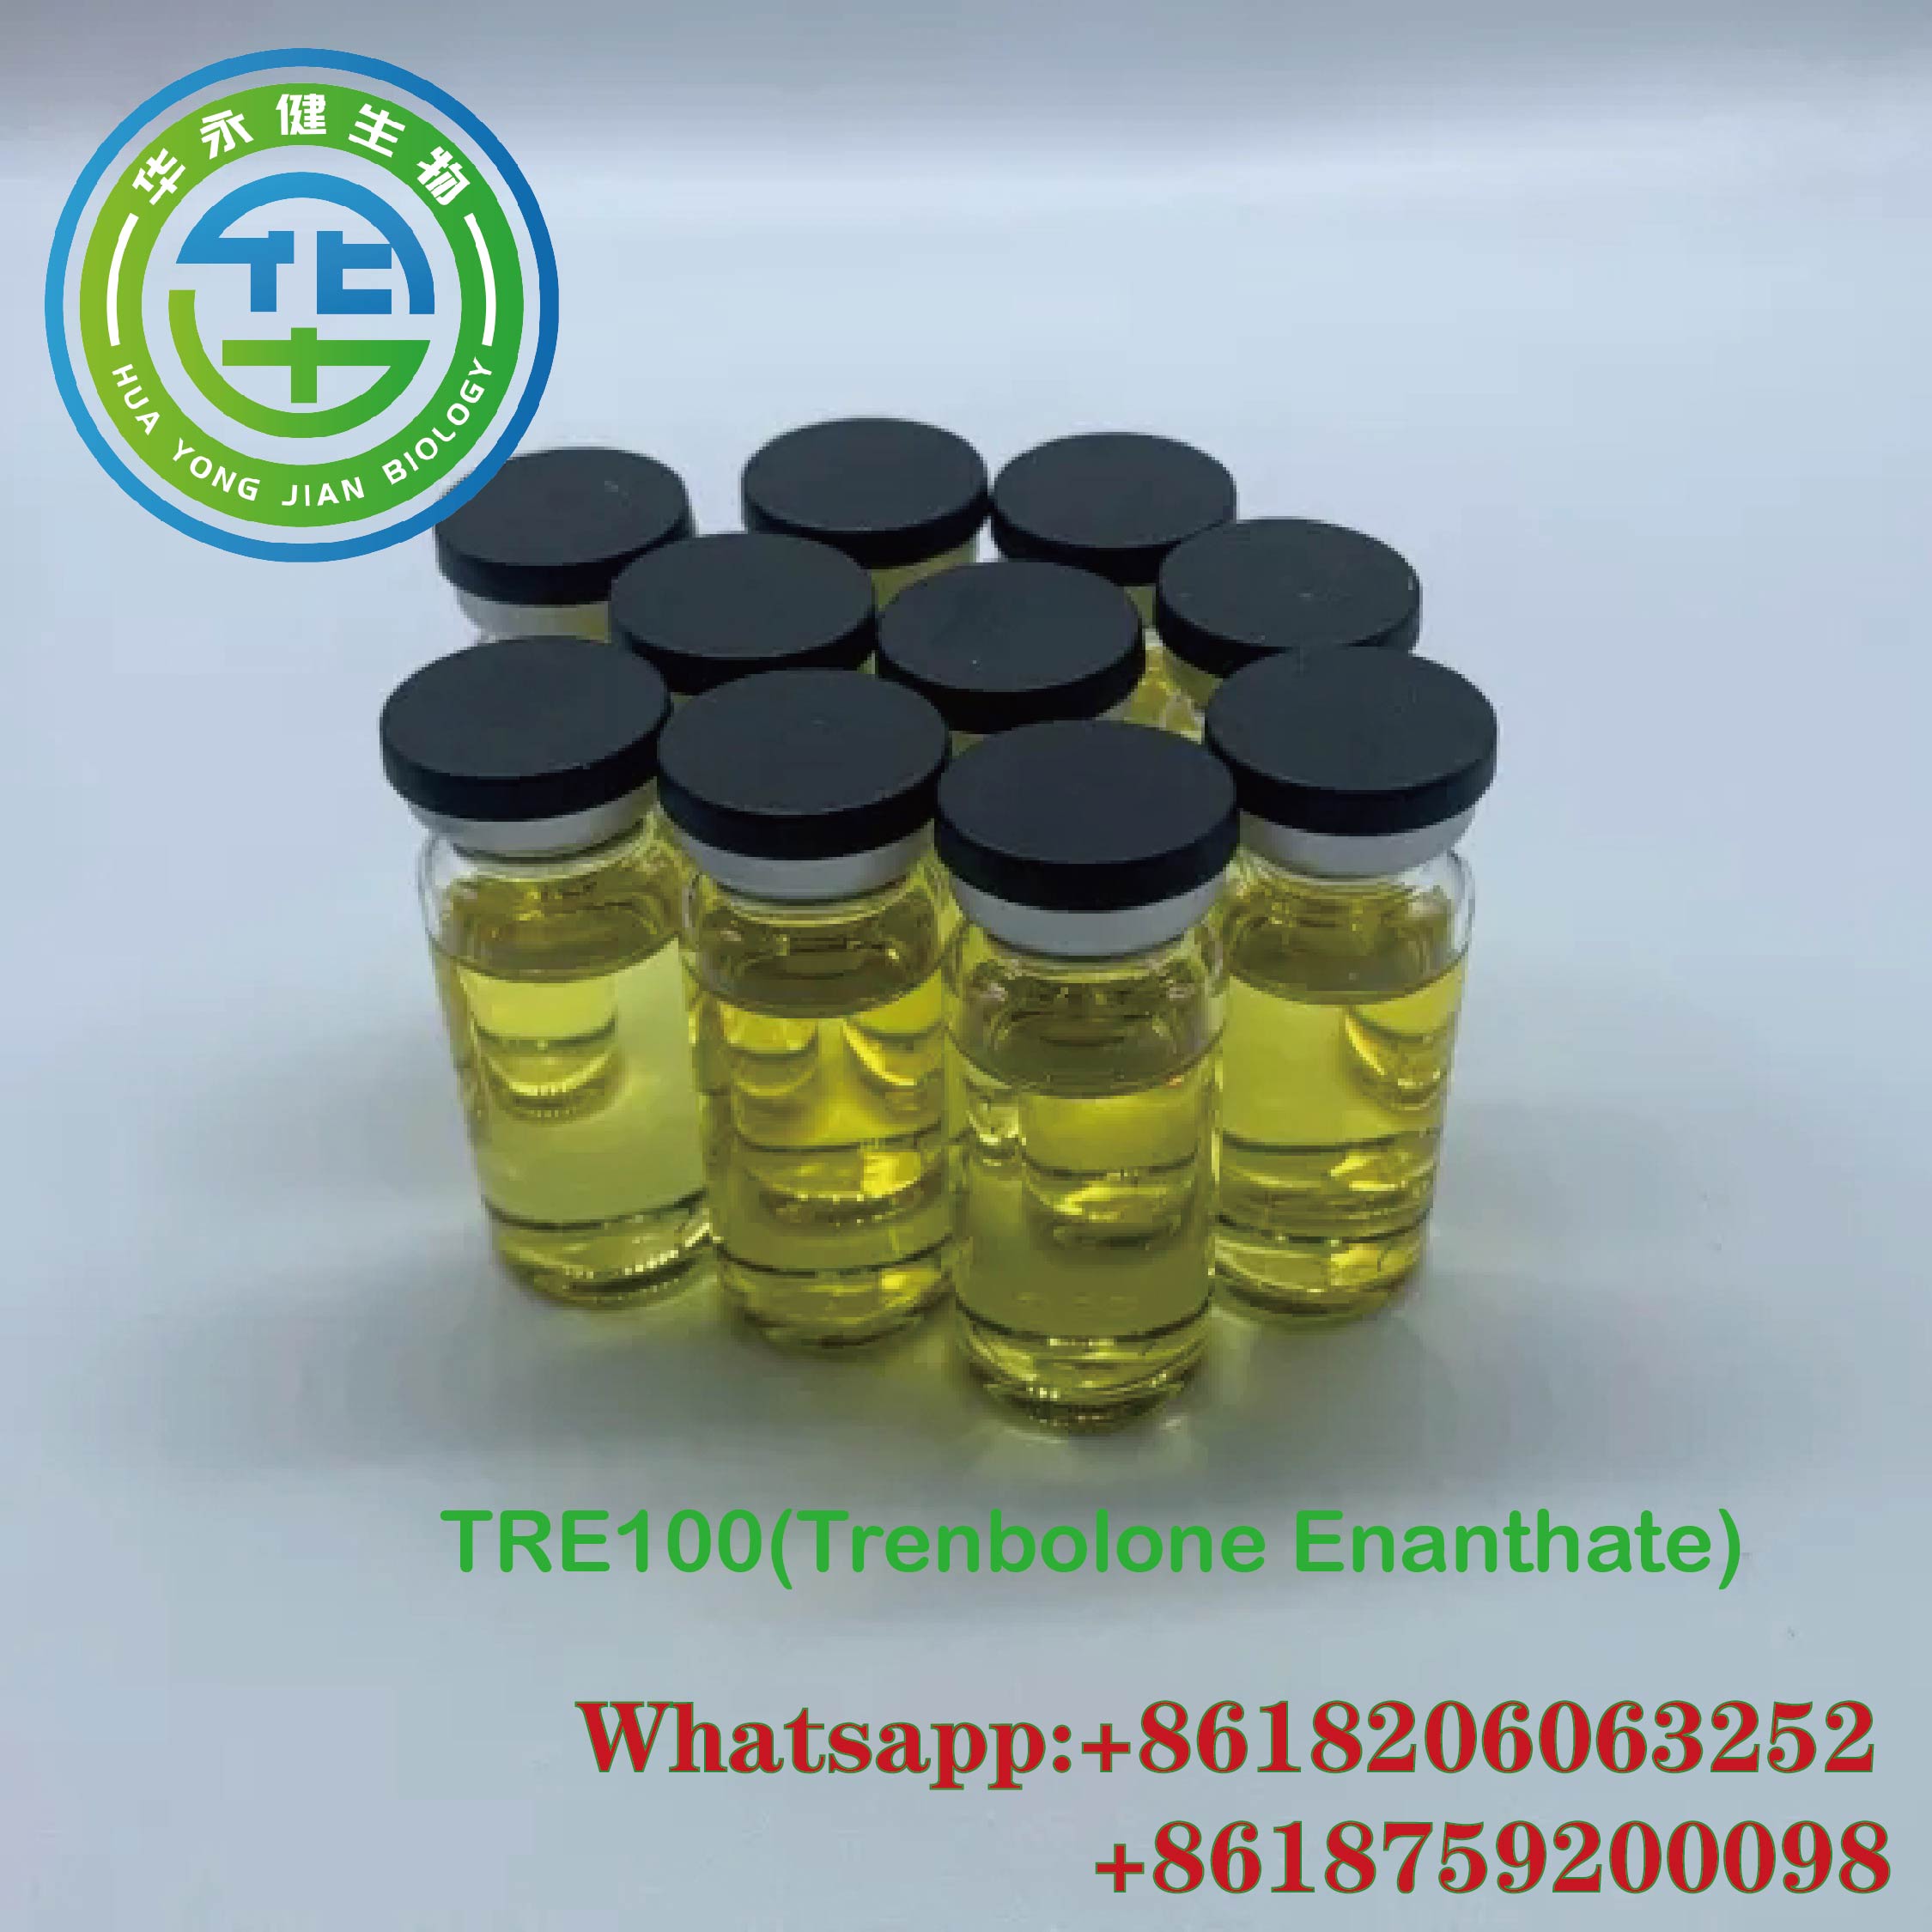 Trenbolone Enanthate100 Injectable Anabolic Steroids TRE100 Bodybuilding Liquid Oil 10ml/Botelya Gipili nga Hulagway